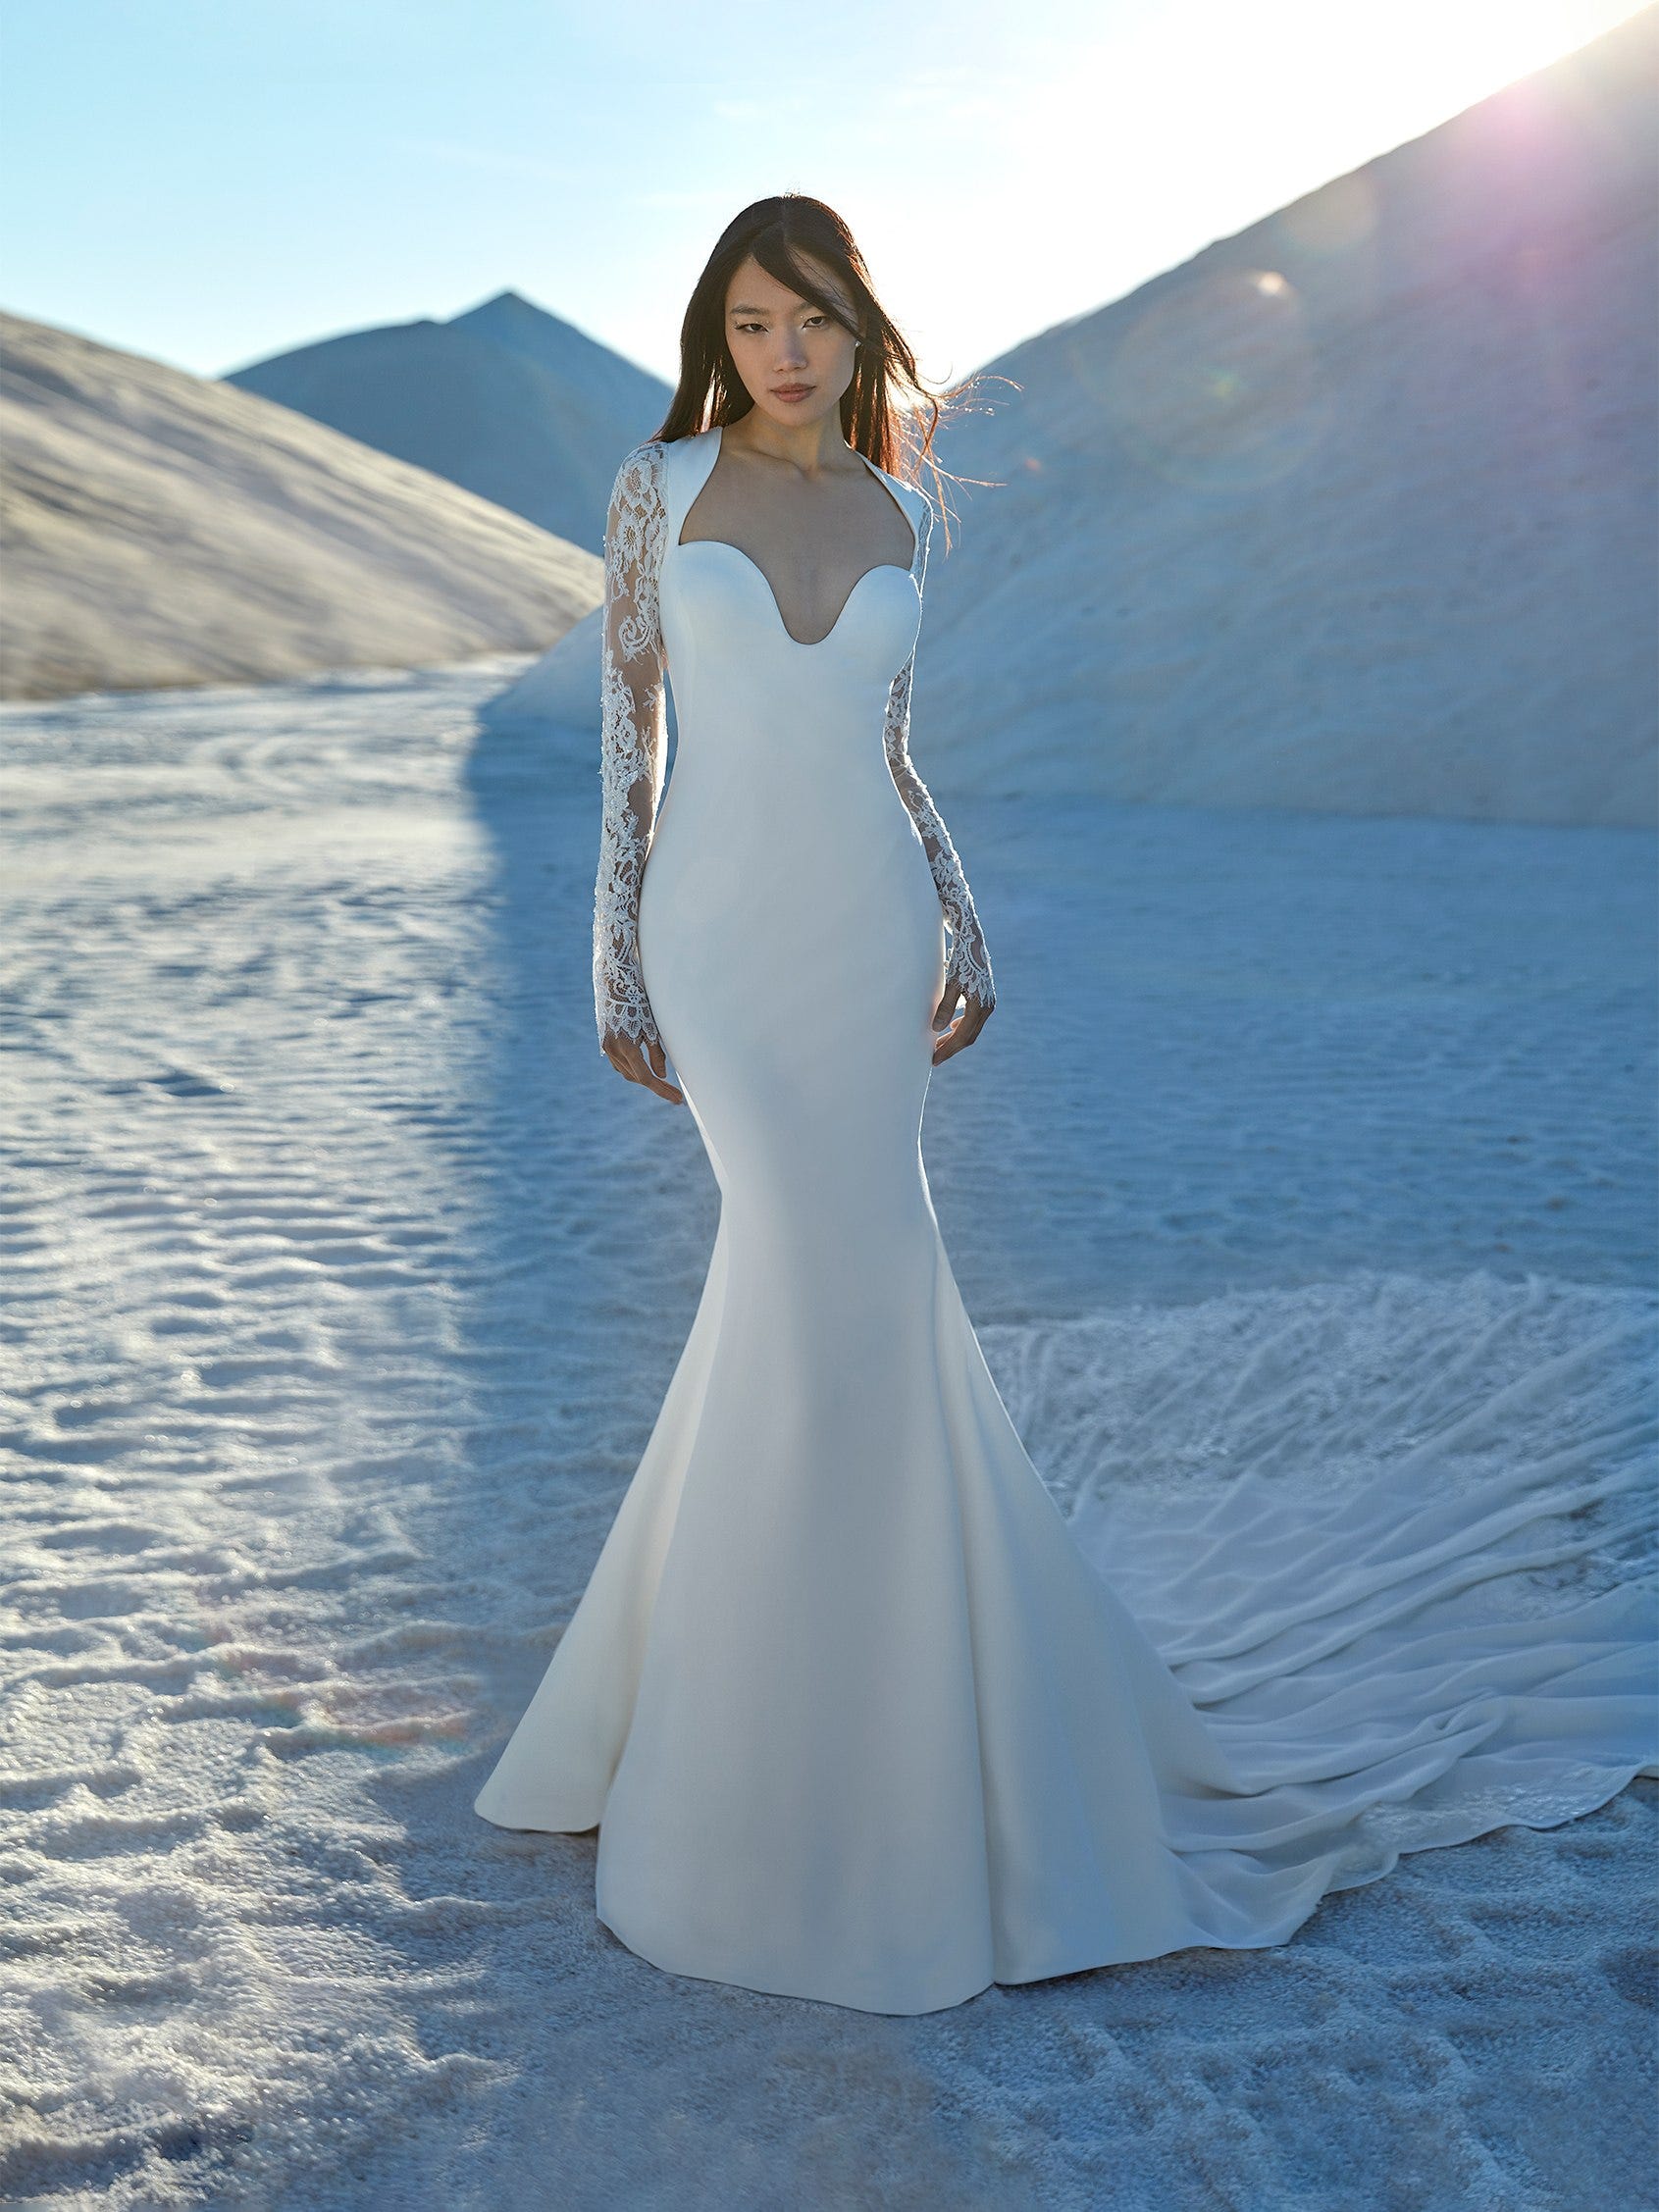 Long Sleeve Wedding Dresses: 30 Perfect Variants